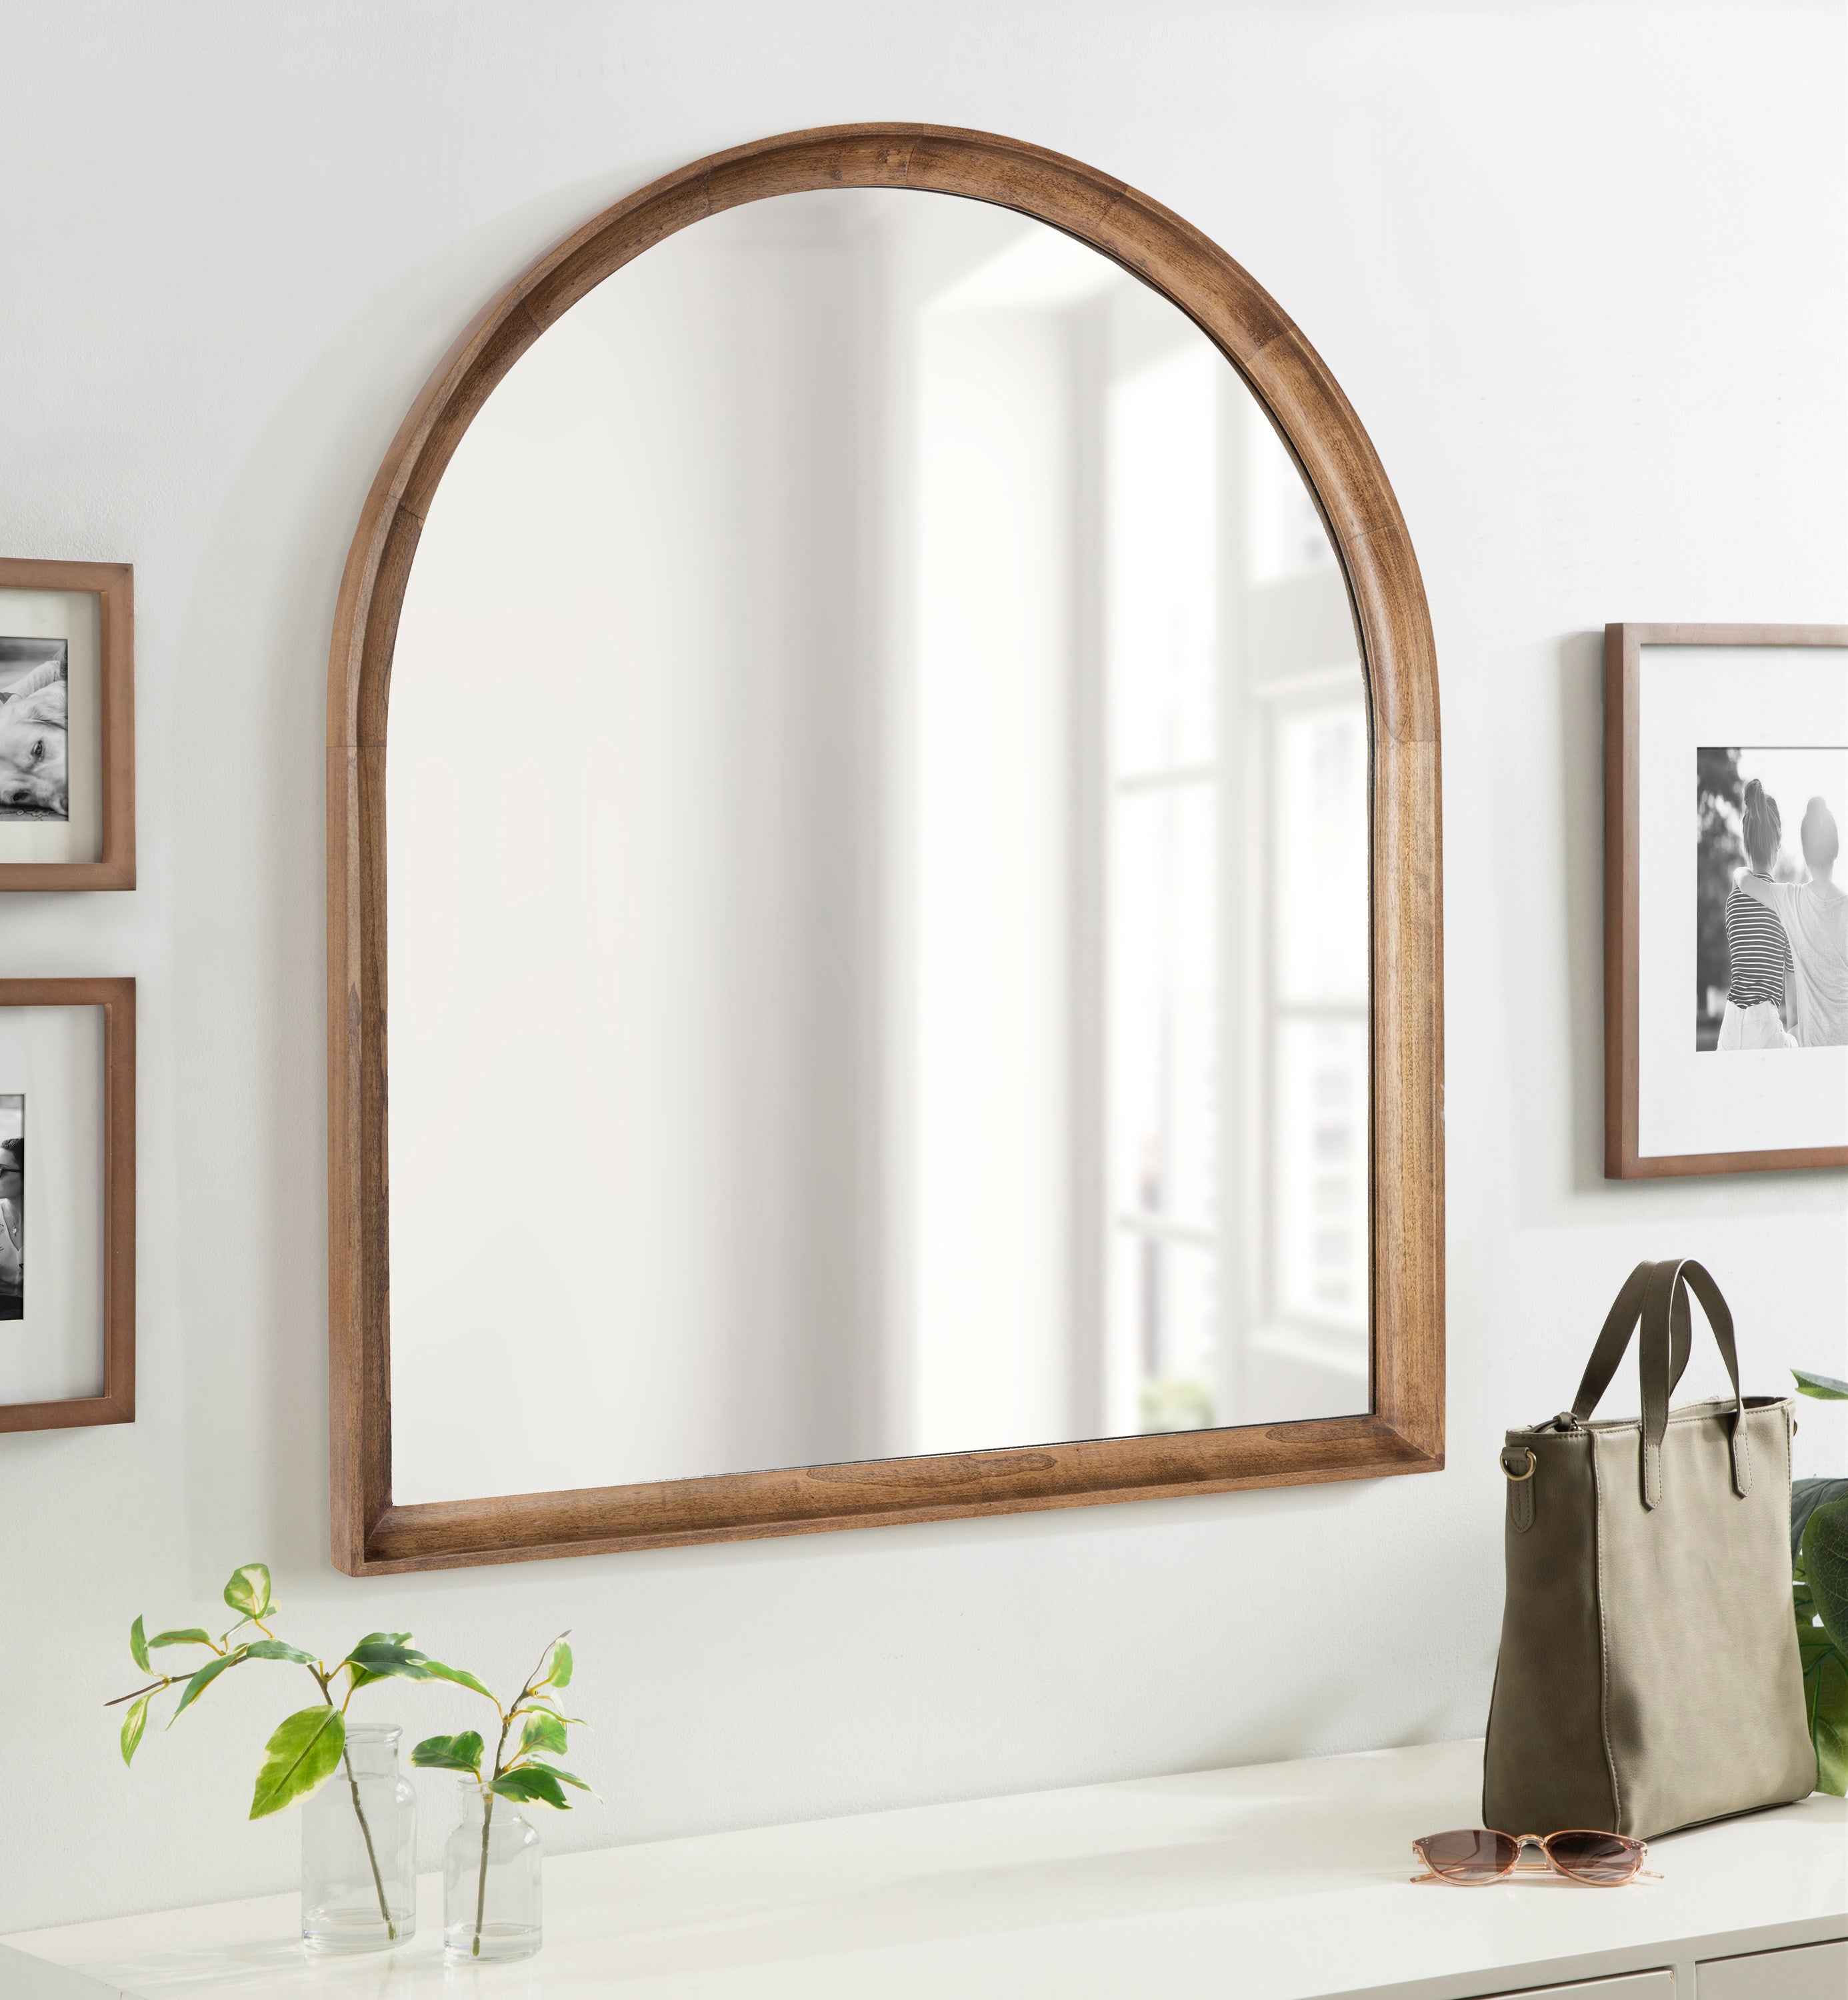 Hatherleigh Arch Wood Wall Mirror